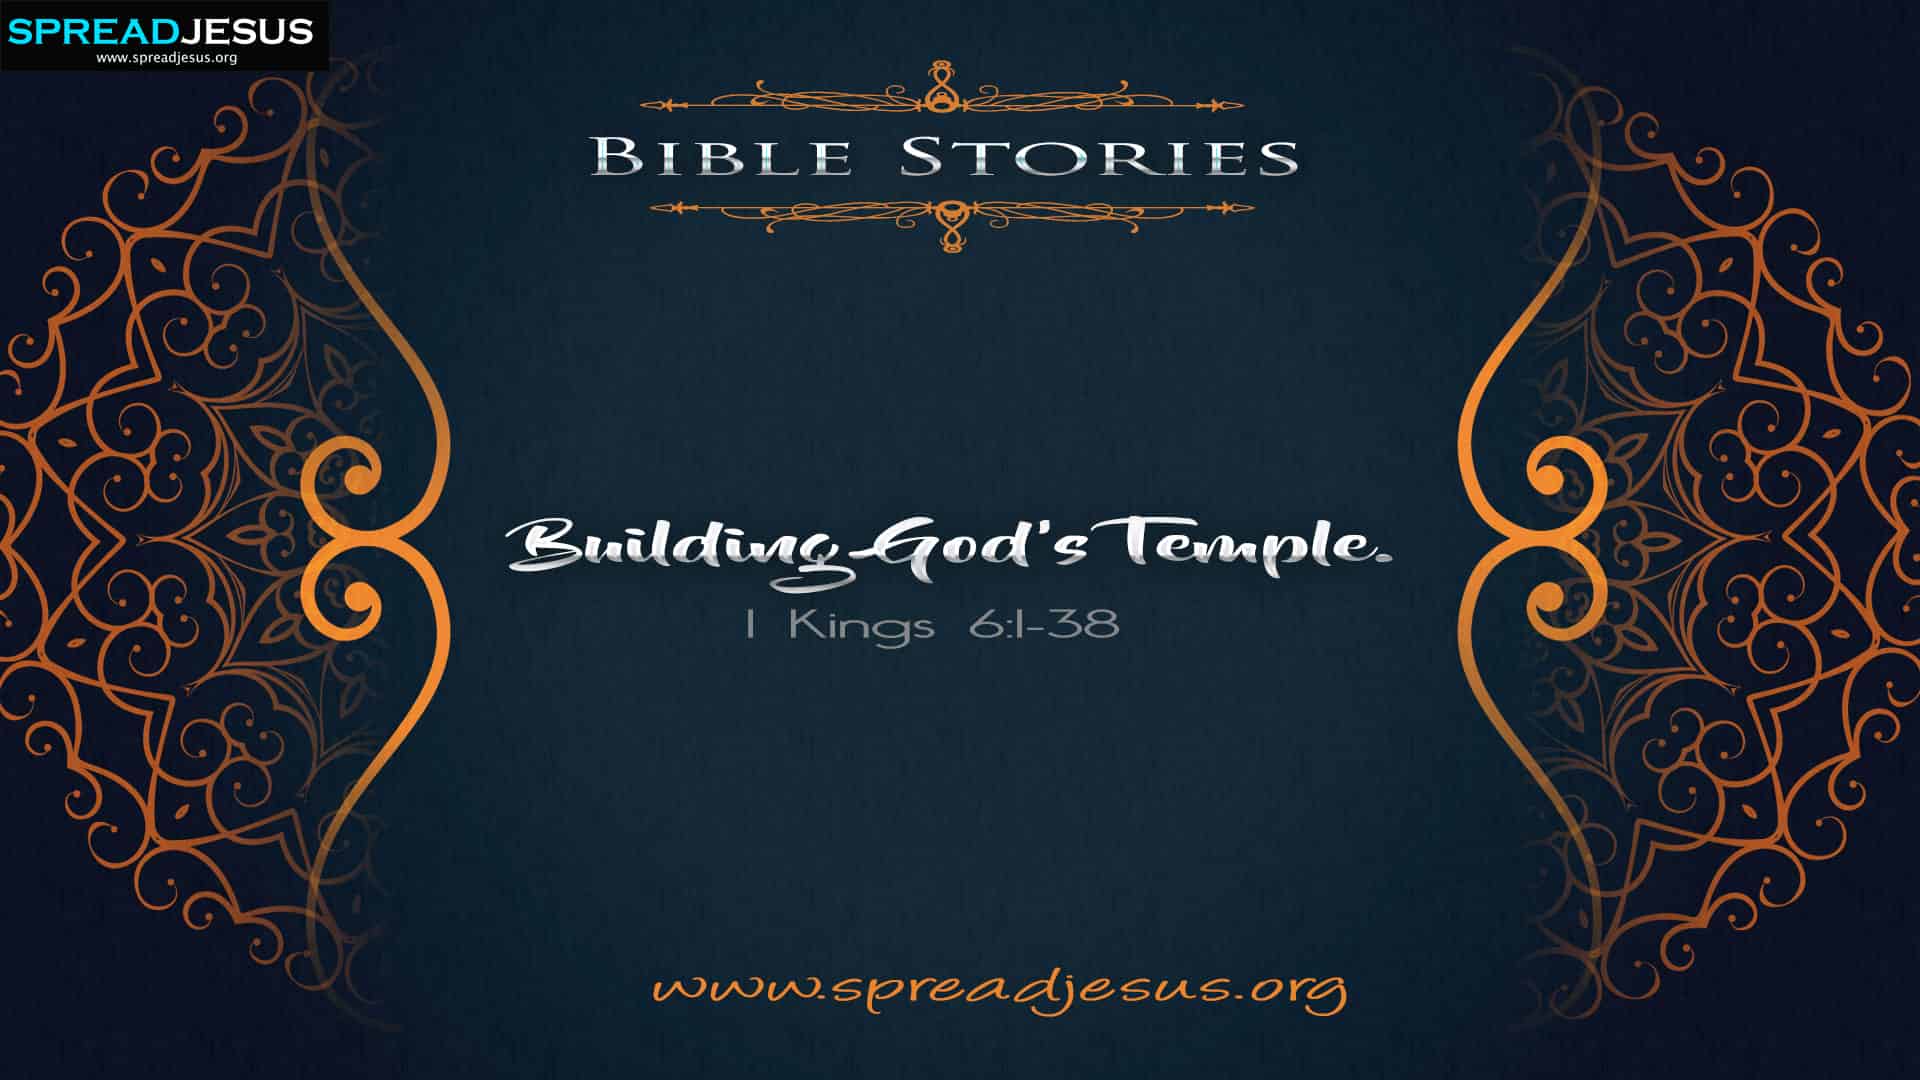 1 Kings 6:1-38: Building God's Temple - Bible Stories Explained 